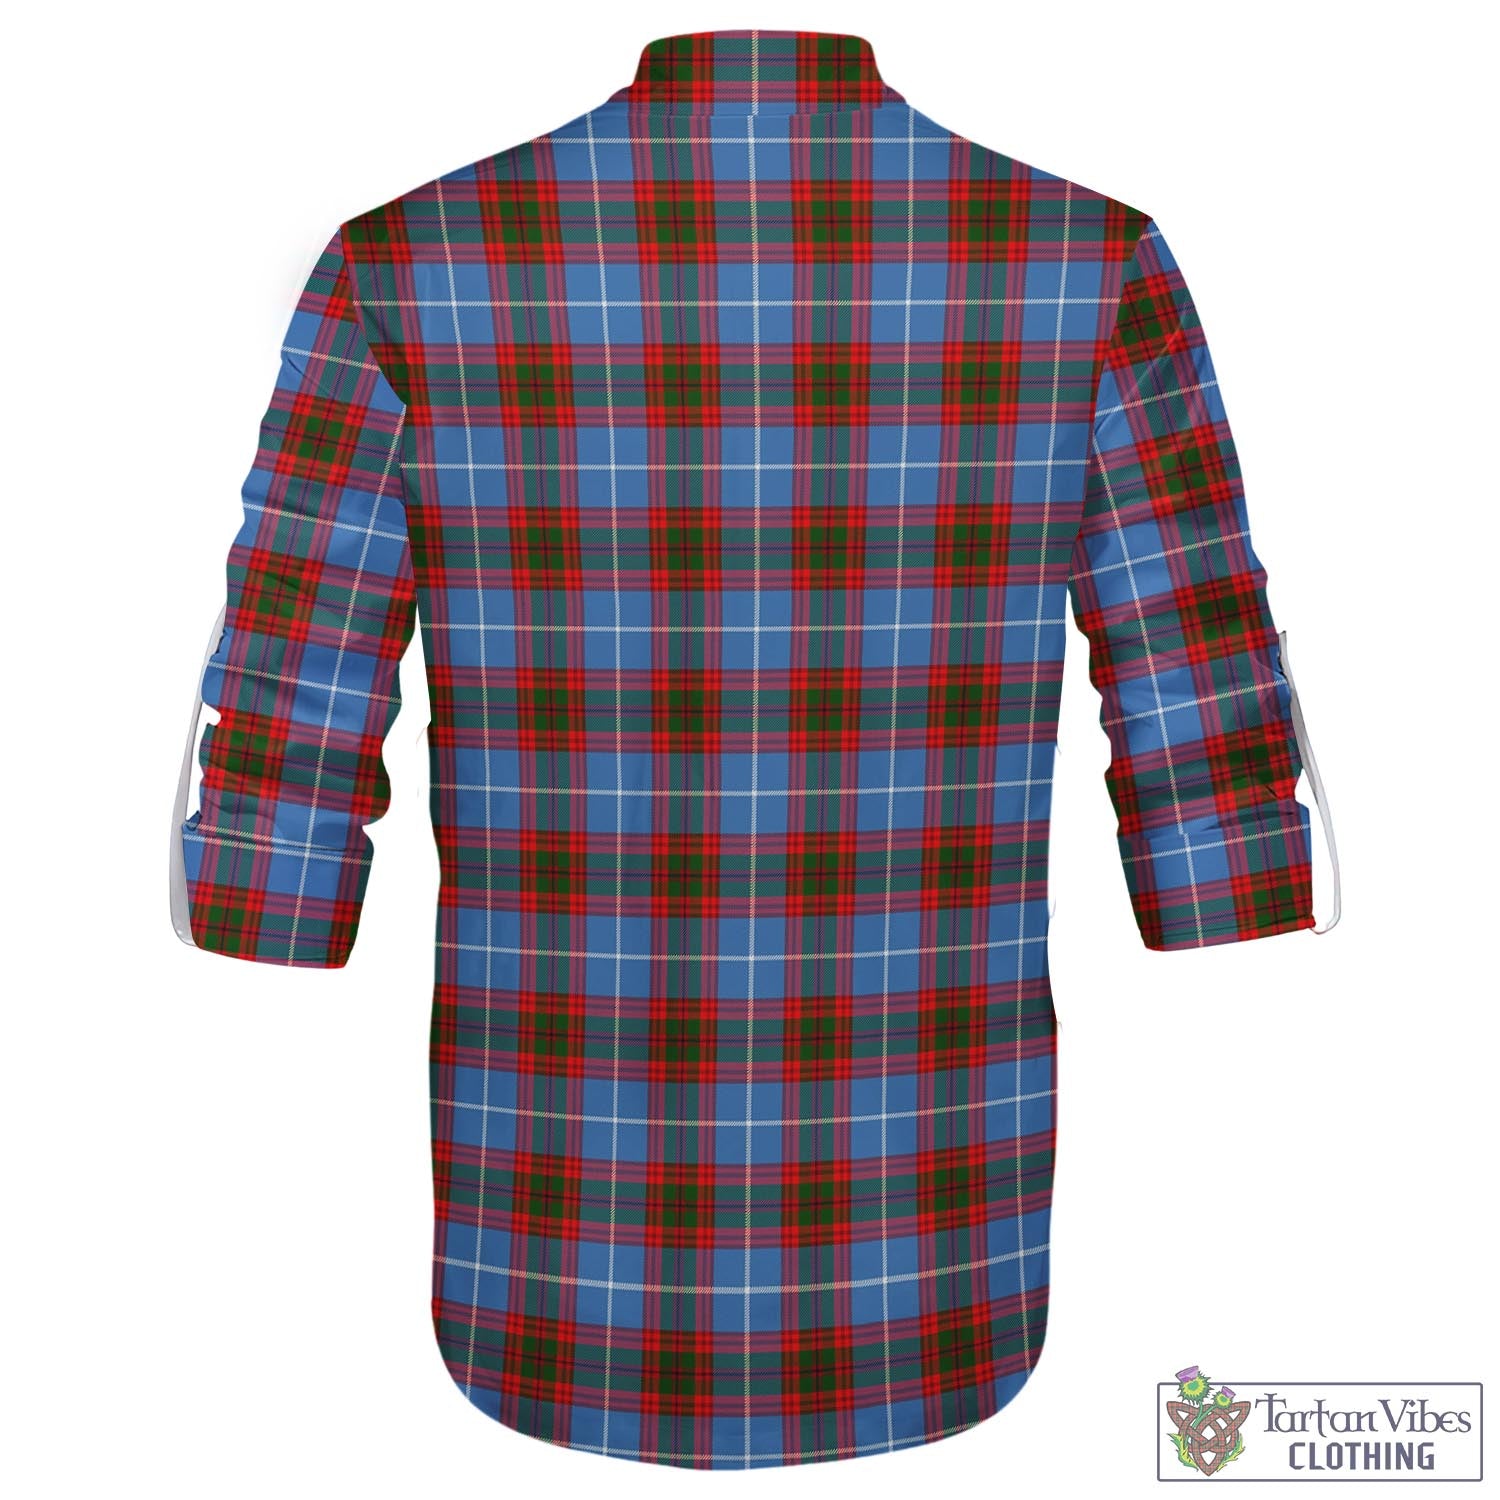 Tartan Vibes Clothing Dalmahoy Tartan Men's Scottish Traditional Jacobite Ghillie Kilt Shirt with Family Crest